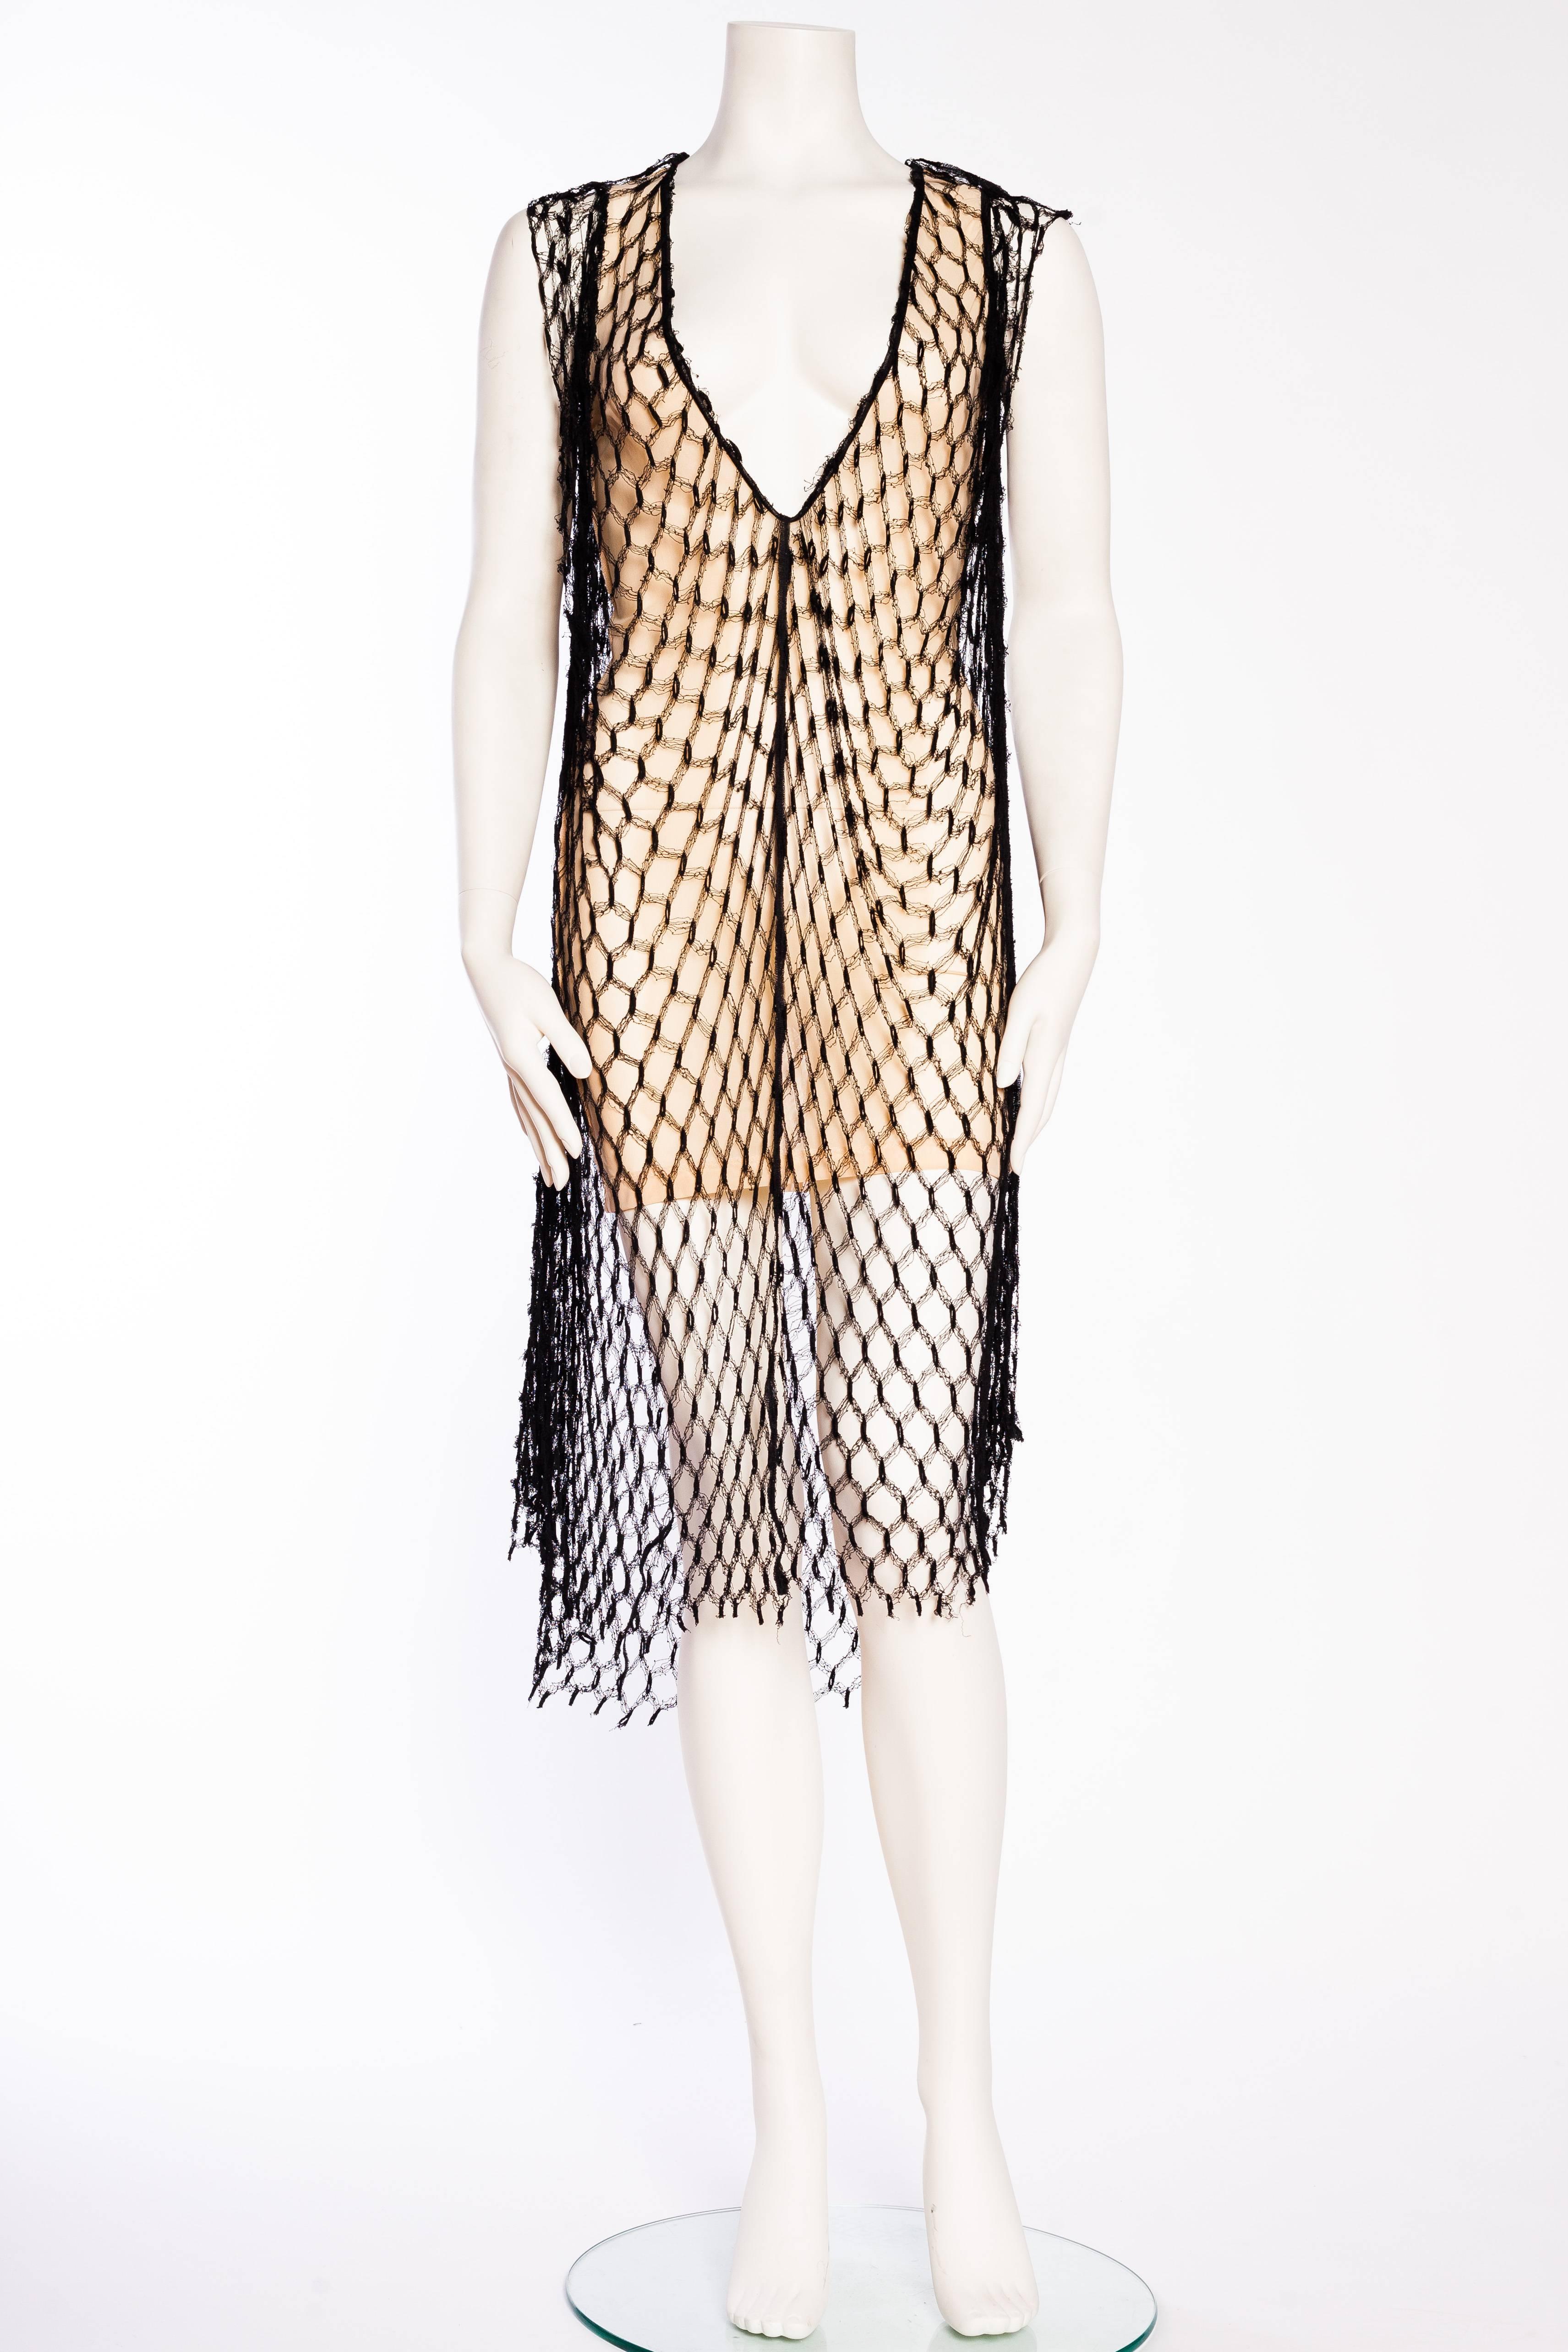 1990S JEAN PAUL GAULTIER Stretch  Net Low-Cut Nude Mini Dress With Oversized Black Fishnet Layer